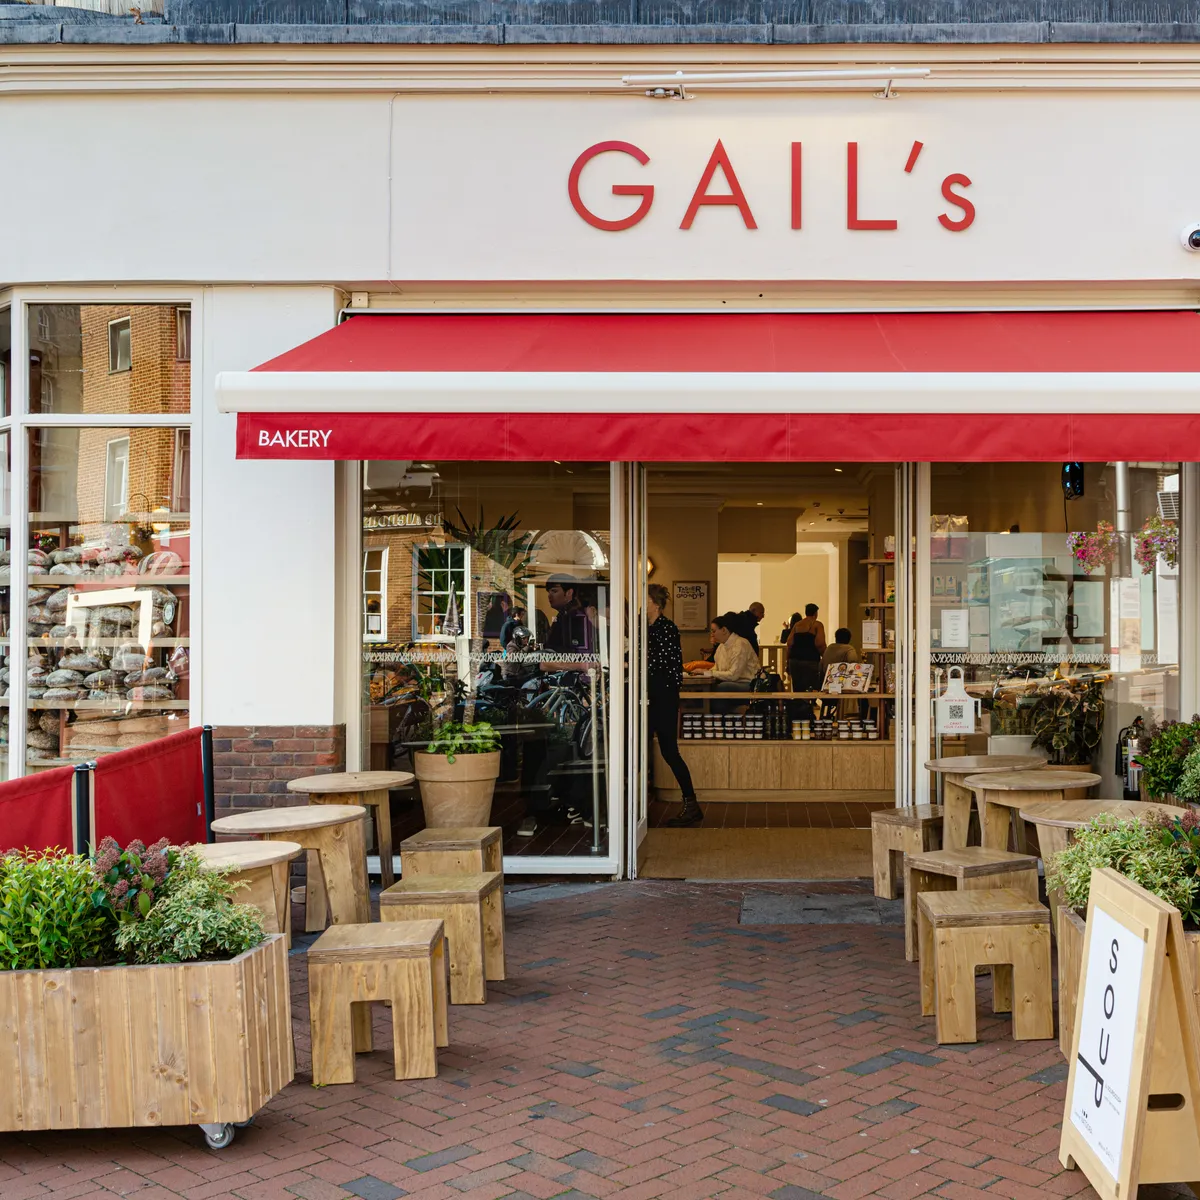 Gails, Reading - Bakery 1